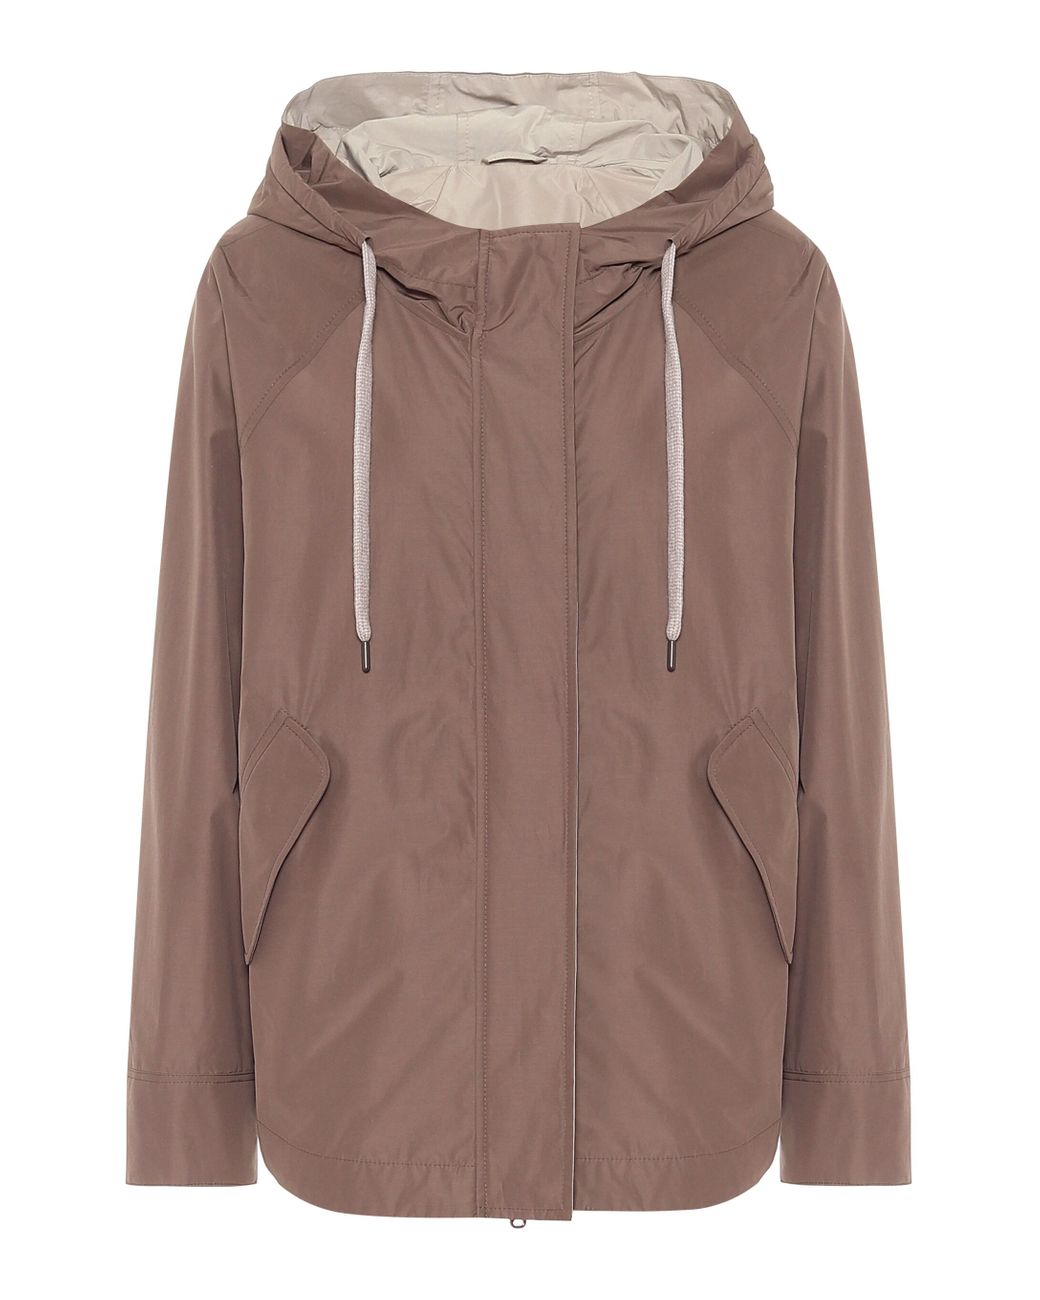 Brunello Cucinelli Hooded Cotton-blend Jacket in Brown - Lyst